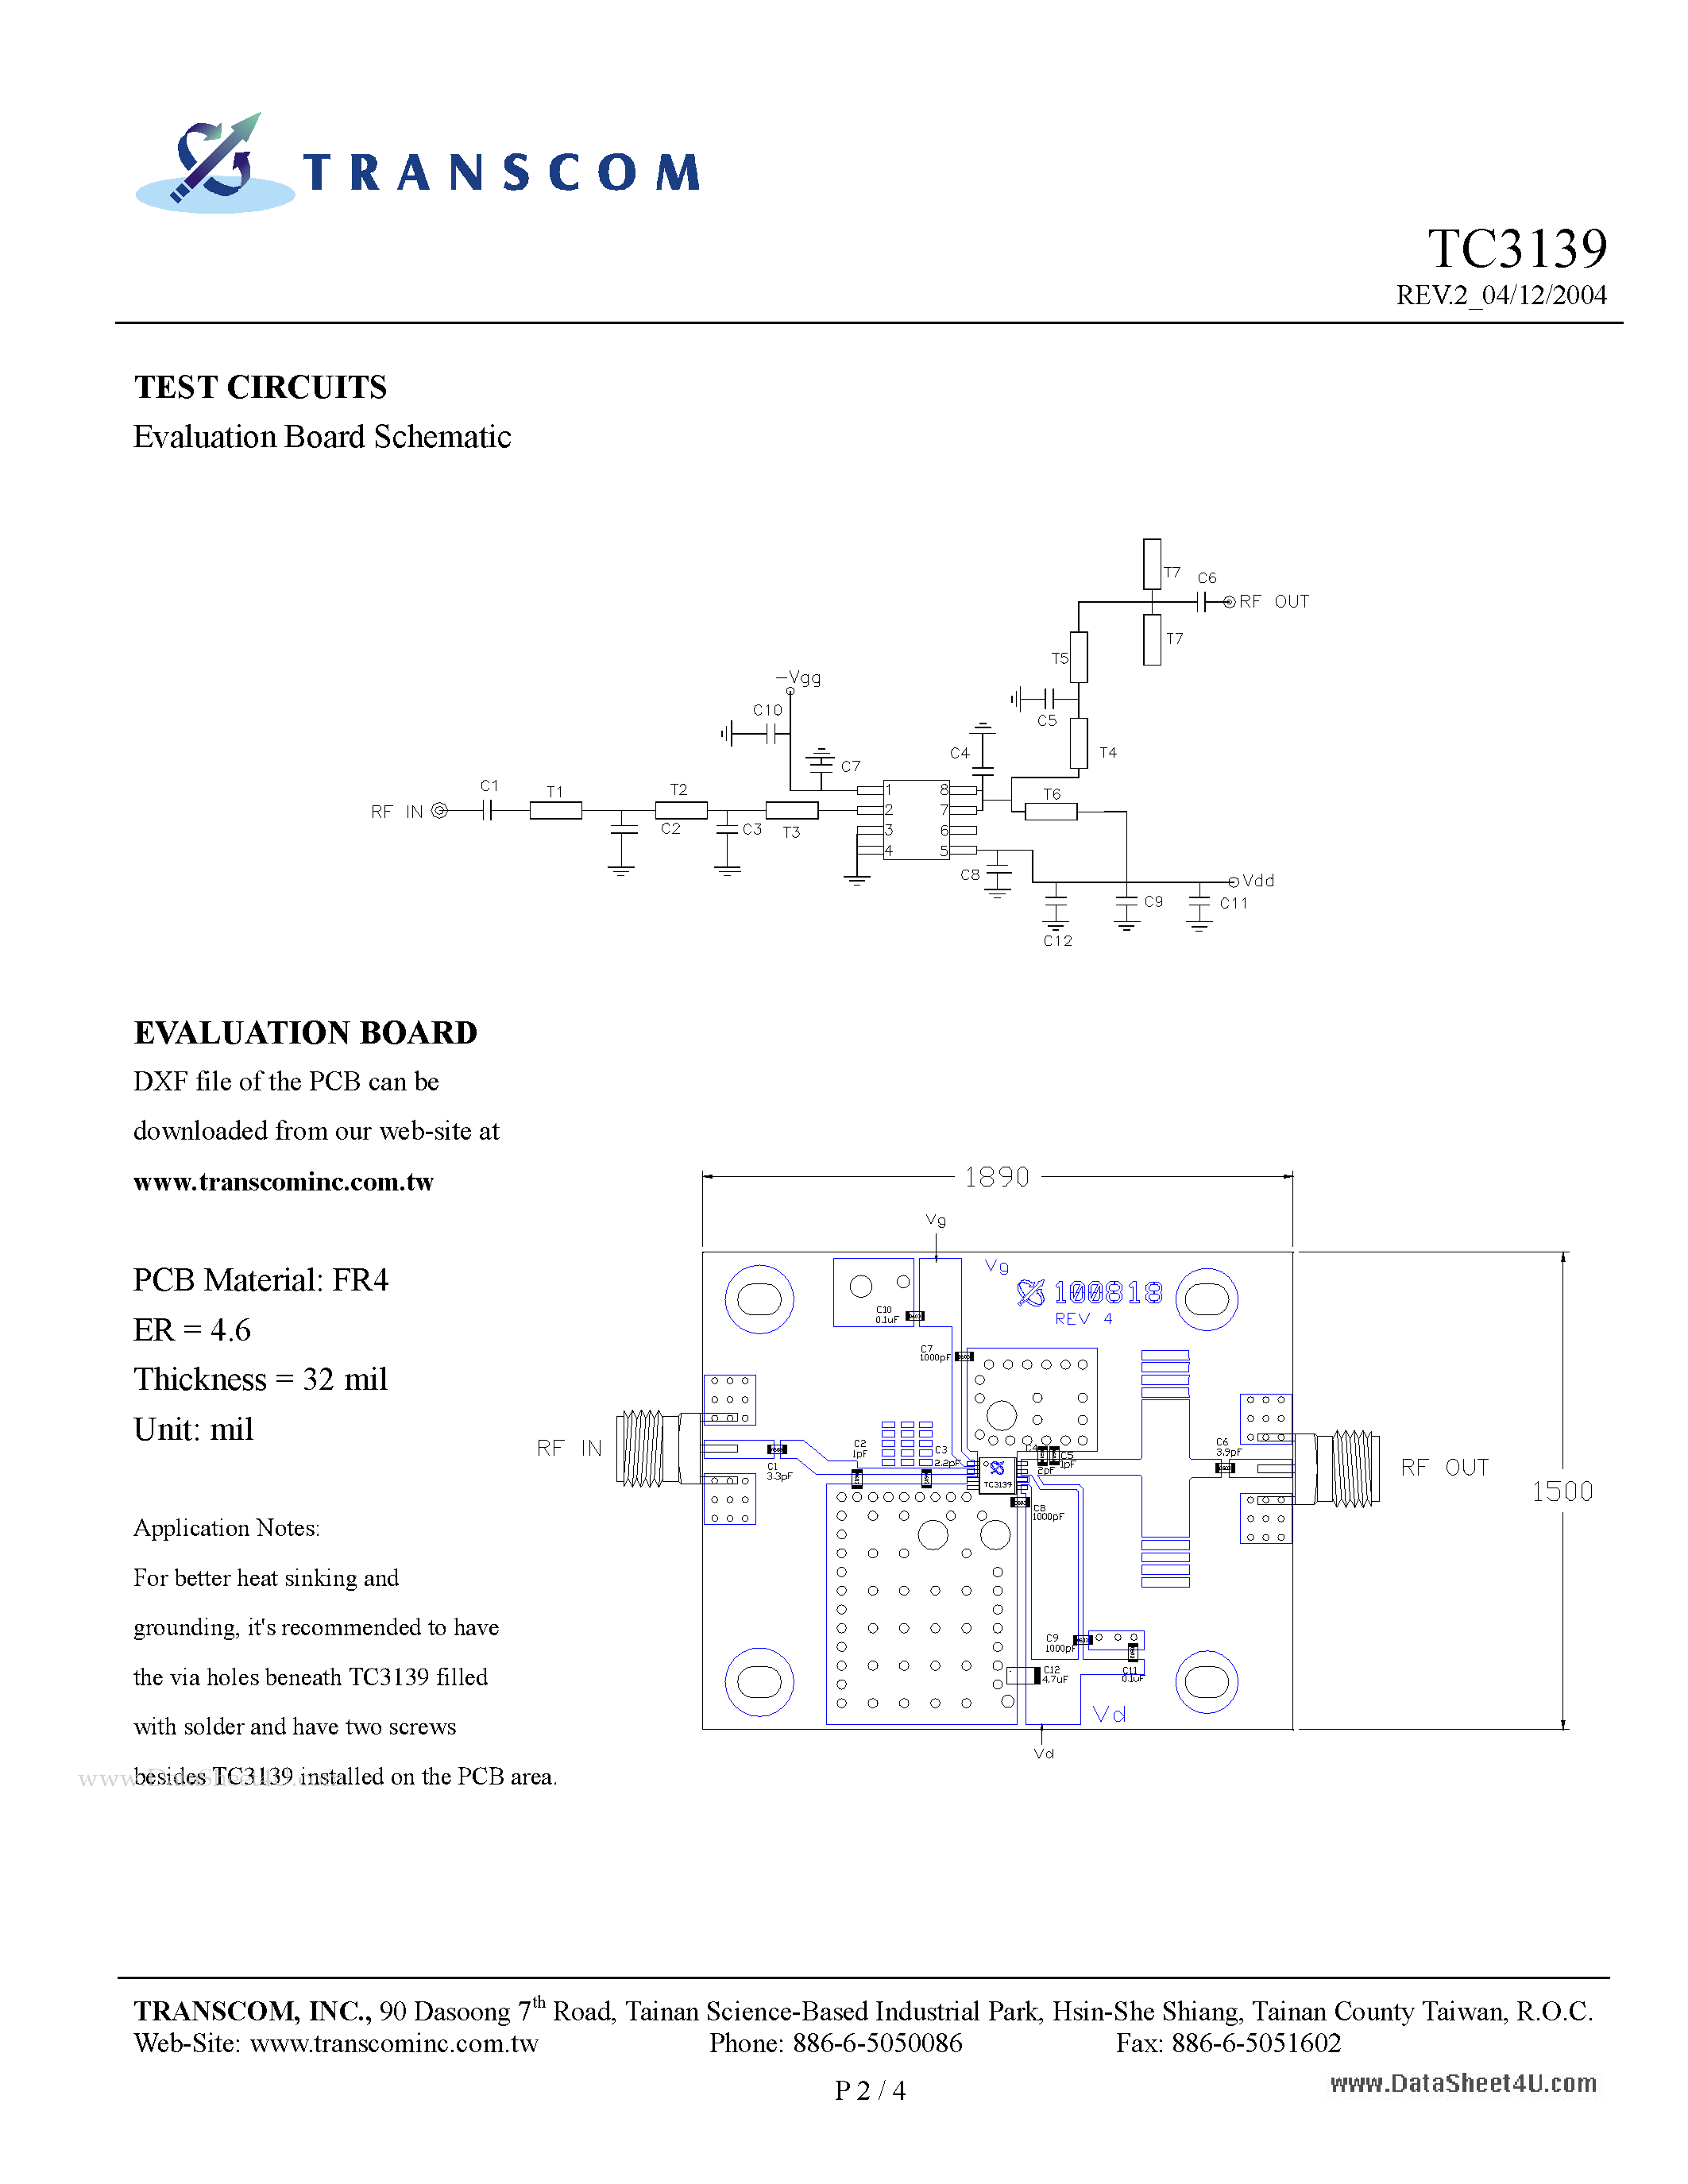 Datasheet TC3139 - 2.3 - 2.5 GHz 1W MMIC page 2